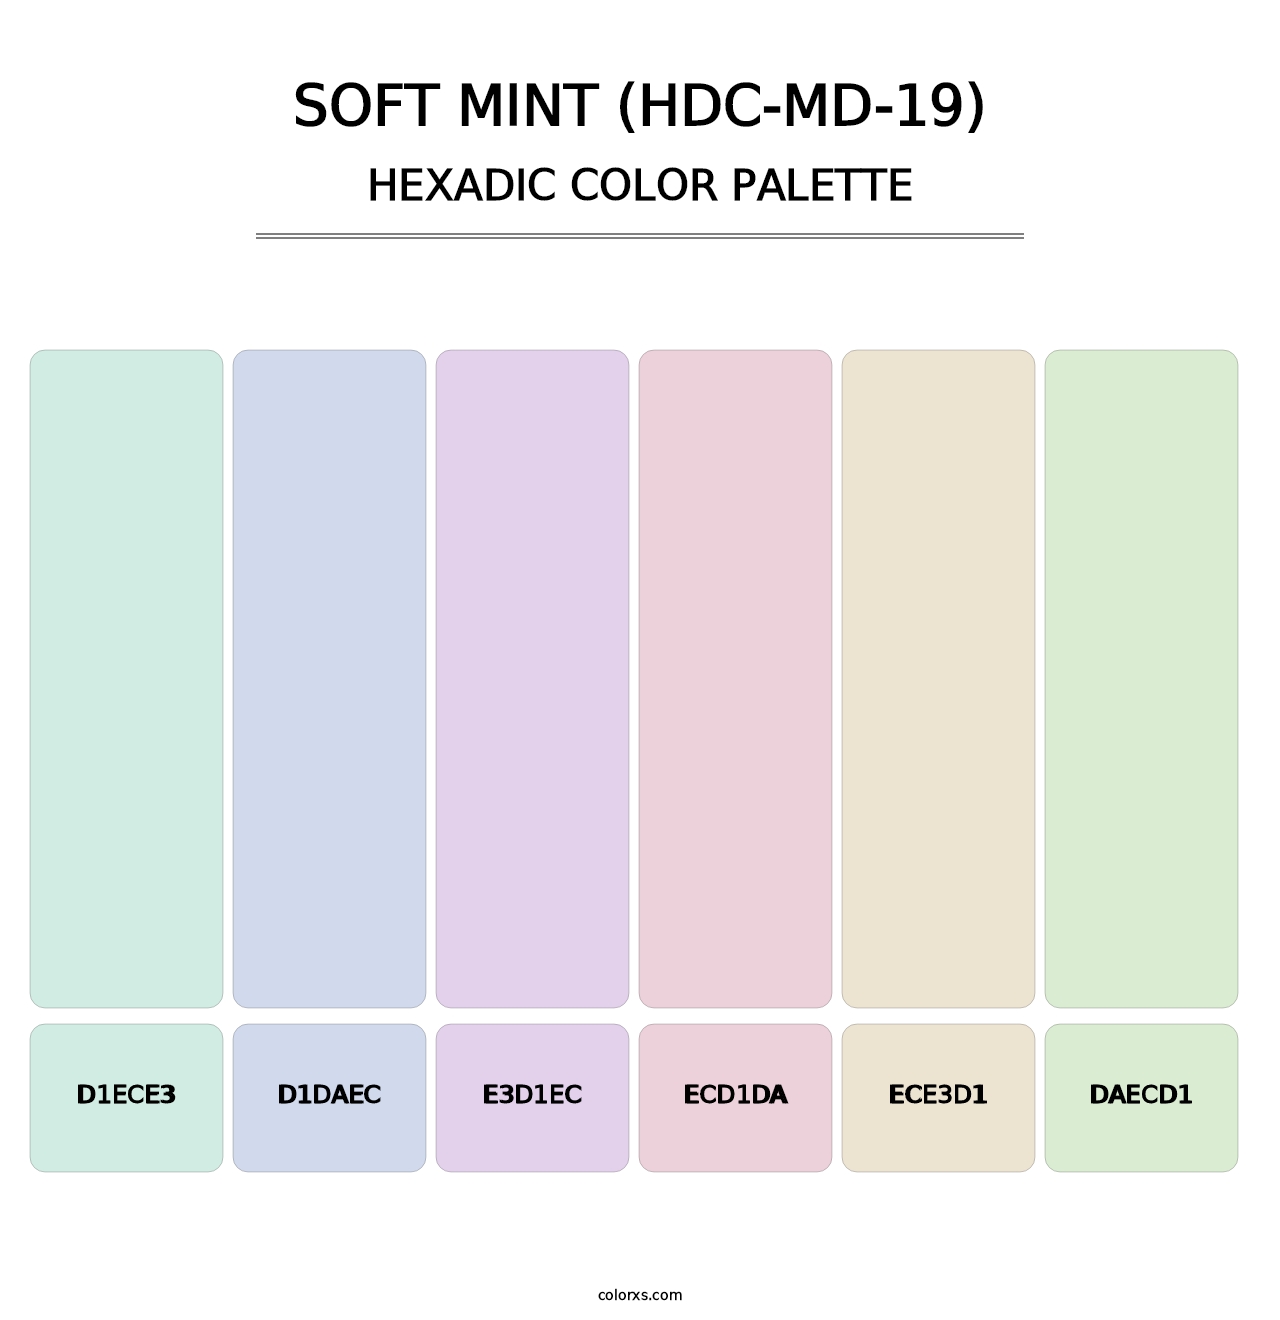 Soft Mint (HDC-MD-19) - Hexadic Color Palette